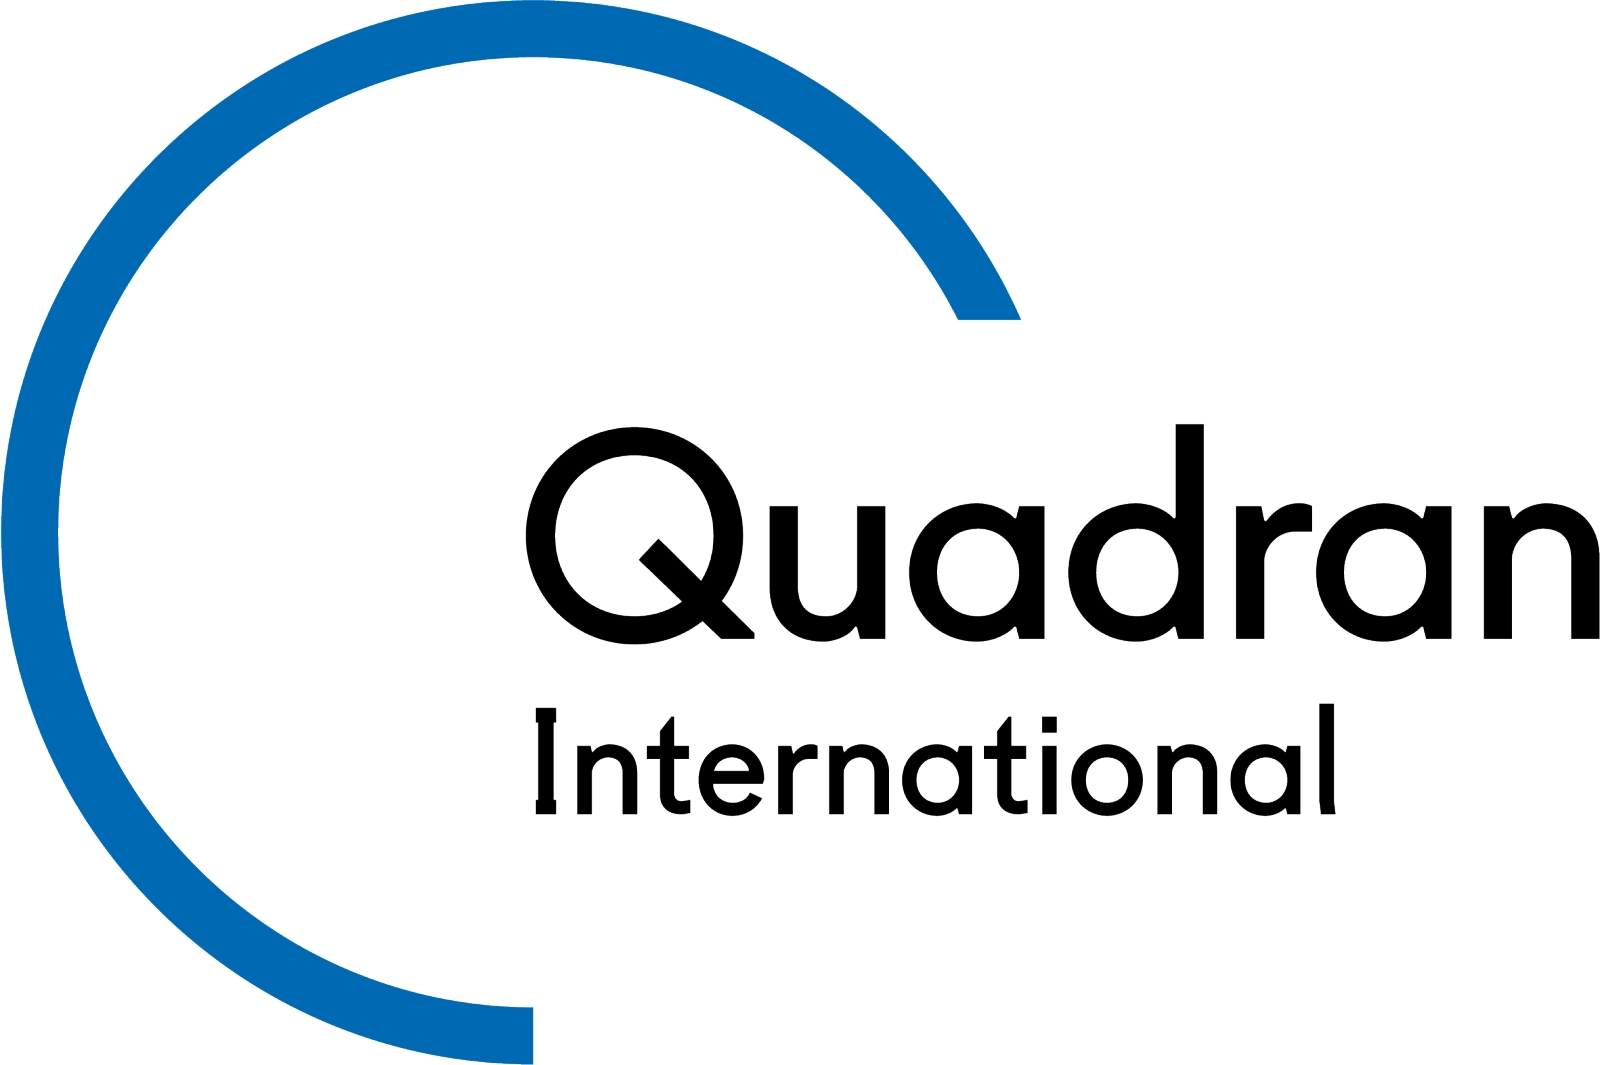 Quadran International